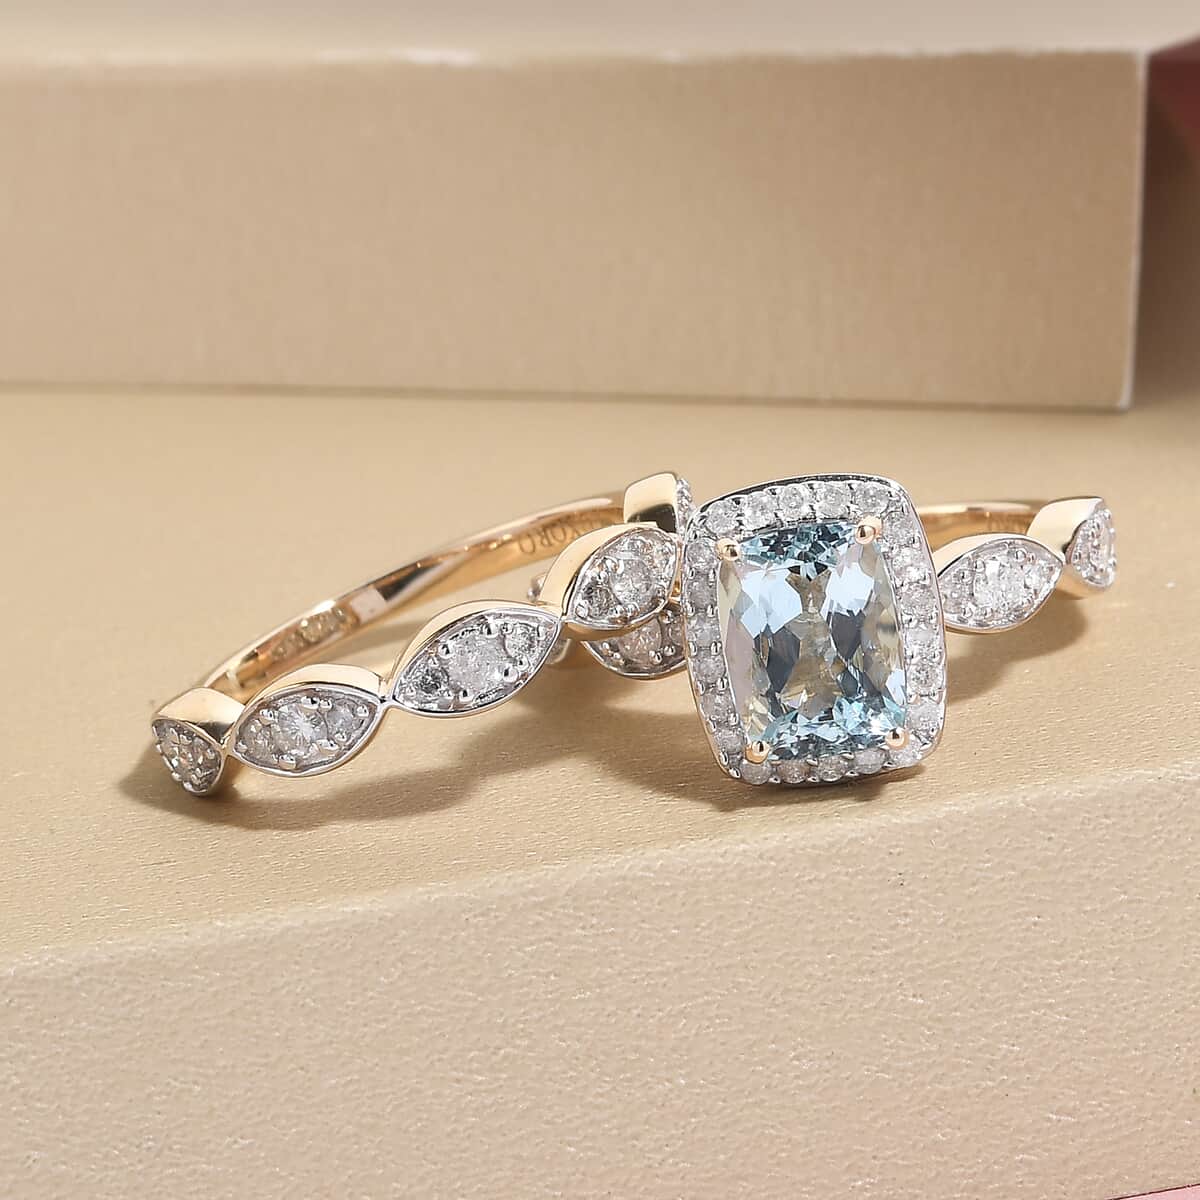 Luxoro 10K Yellow Gold Mangoro Aquamarine and G-H I3 Diamond Set of 2 Ring (Size 8.0) 4.45 Grams 1.85 ctw image number 1